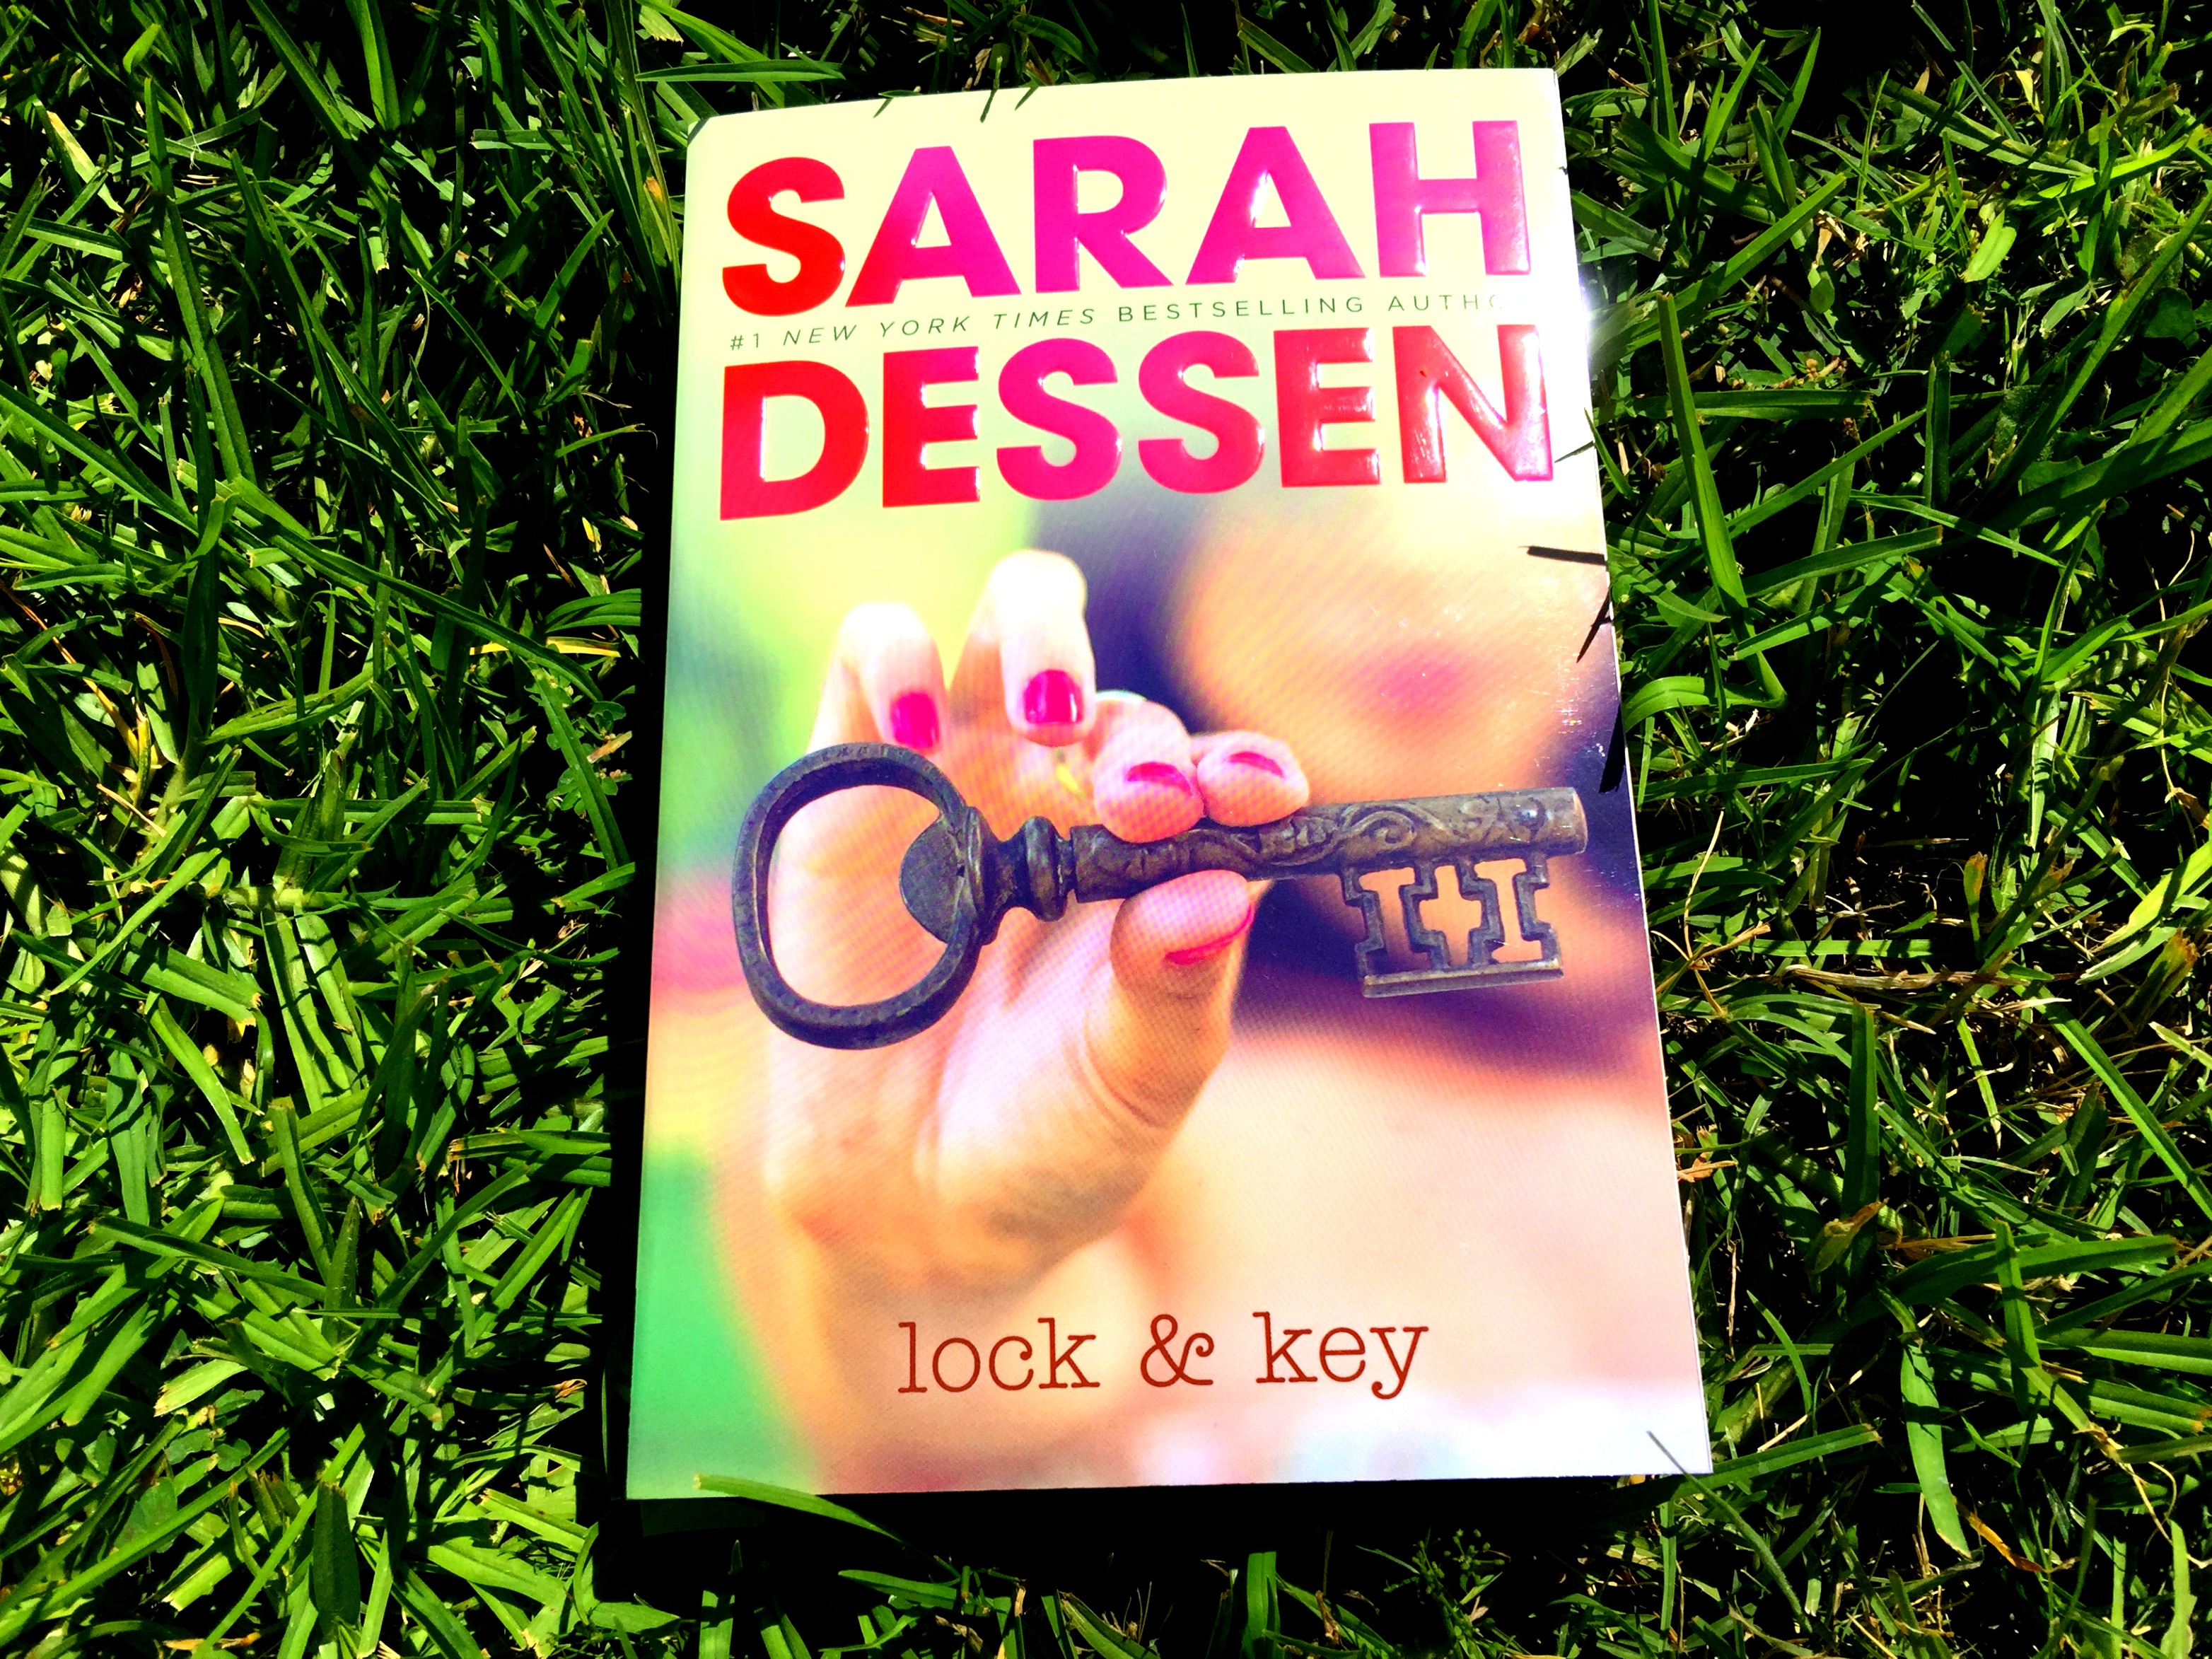 lock & key summer of sarah dessen